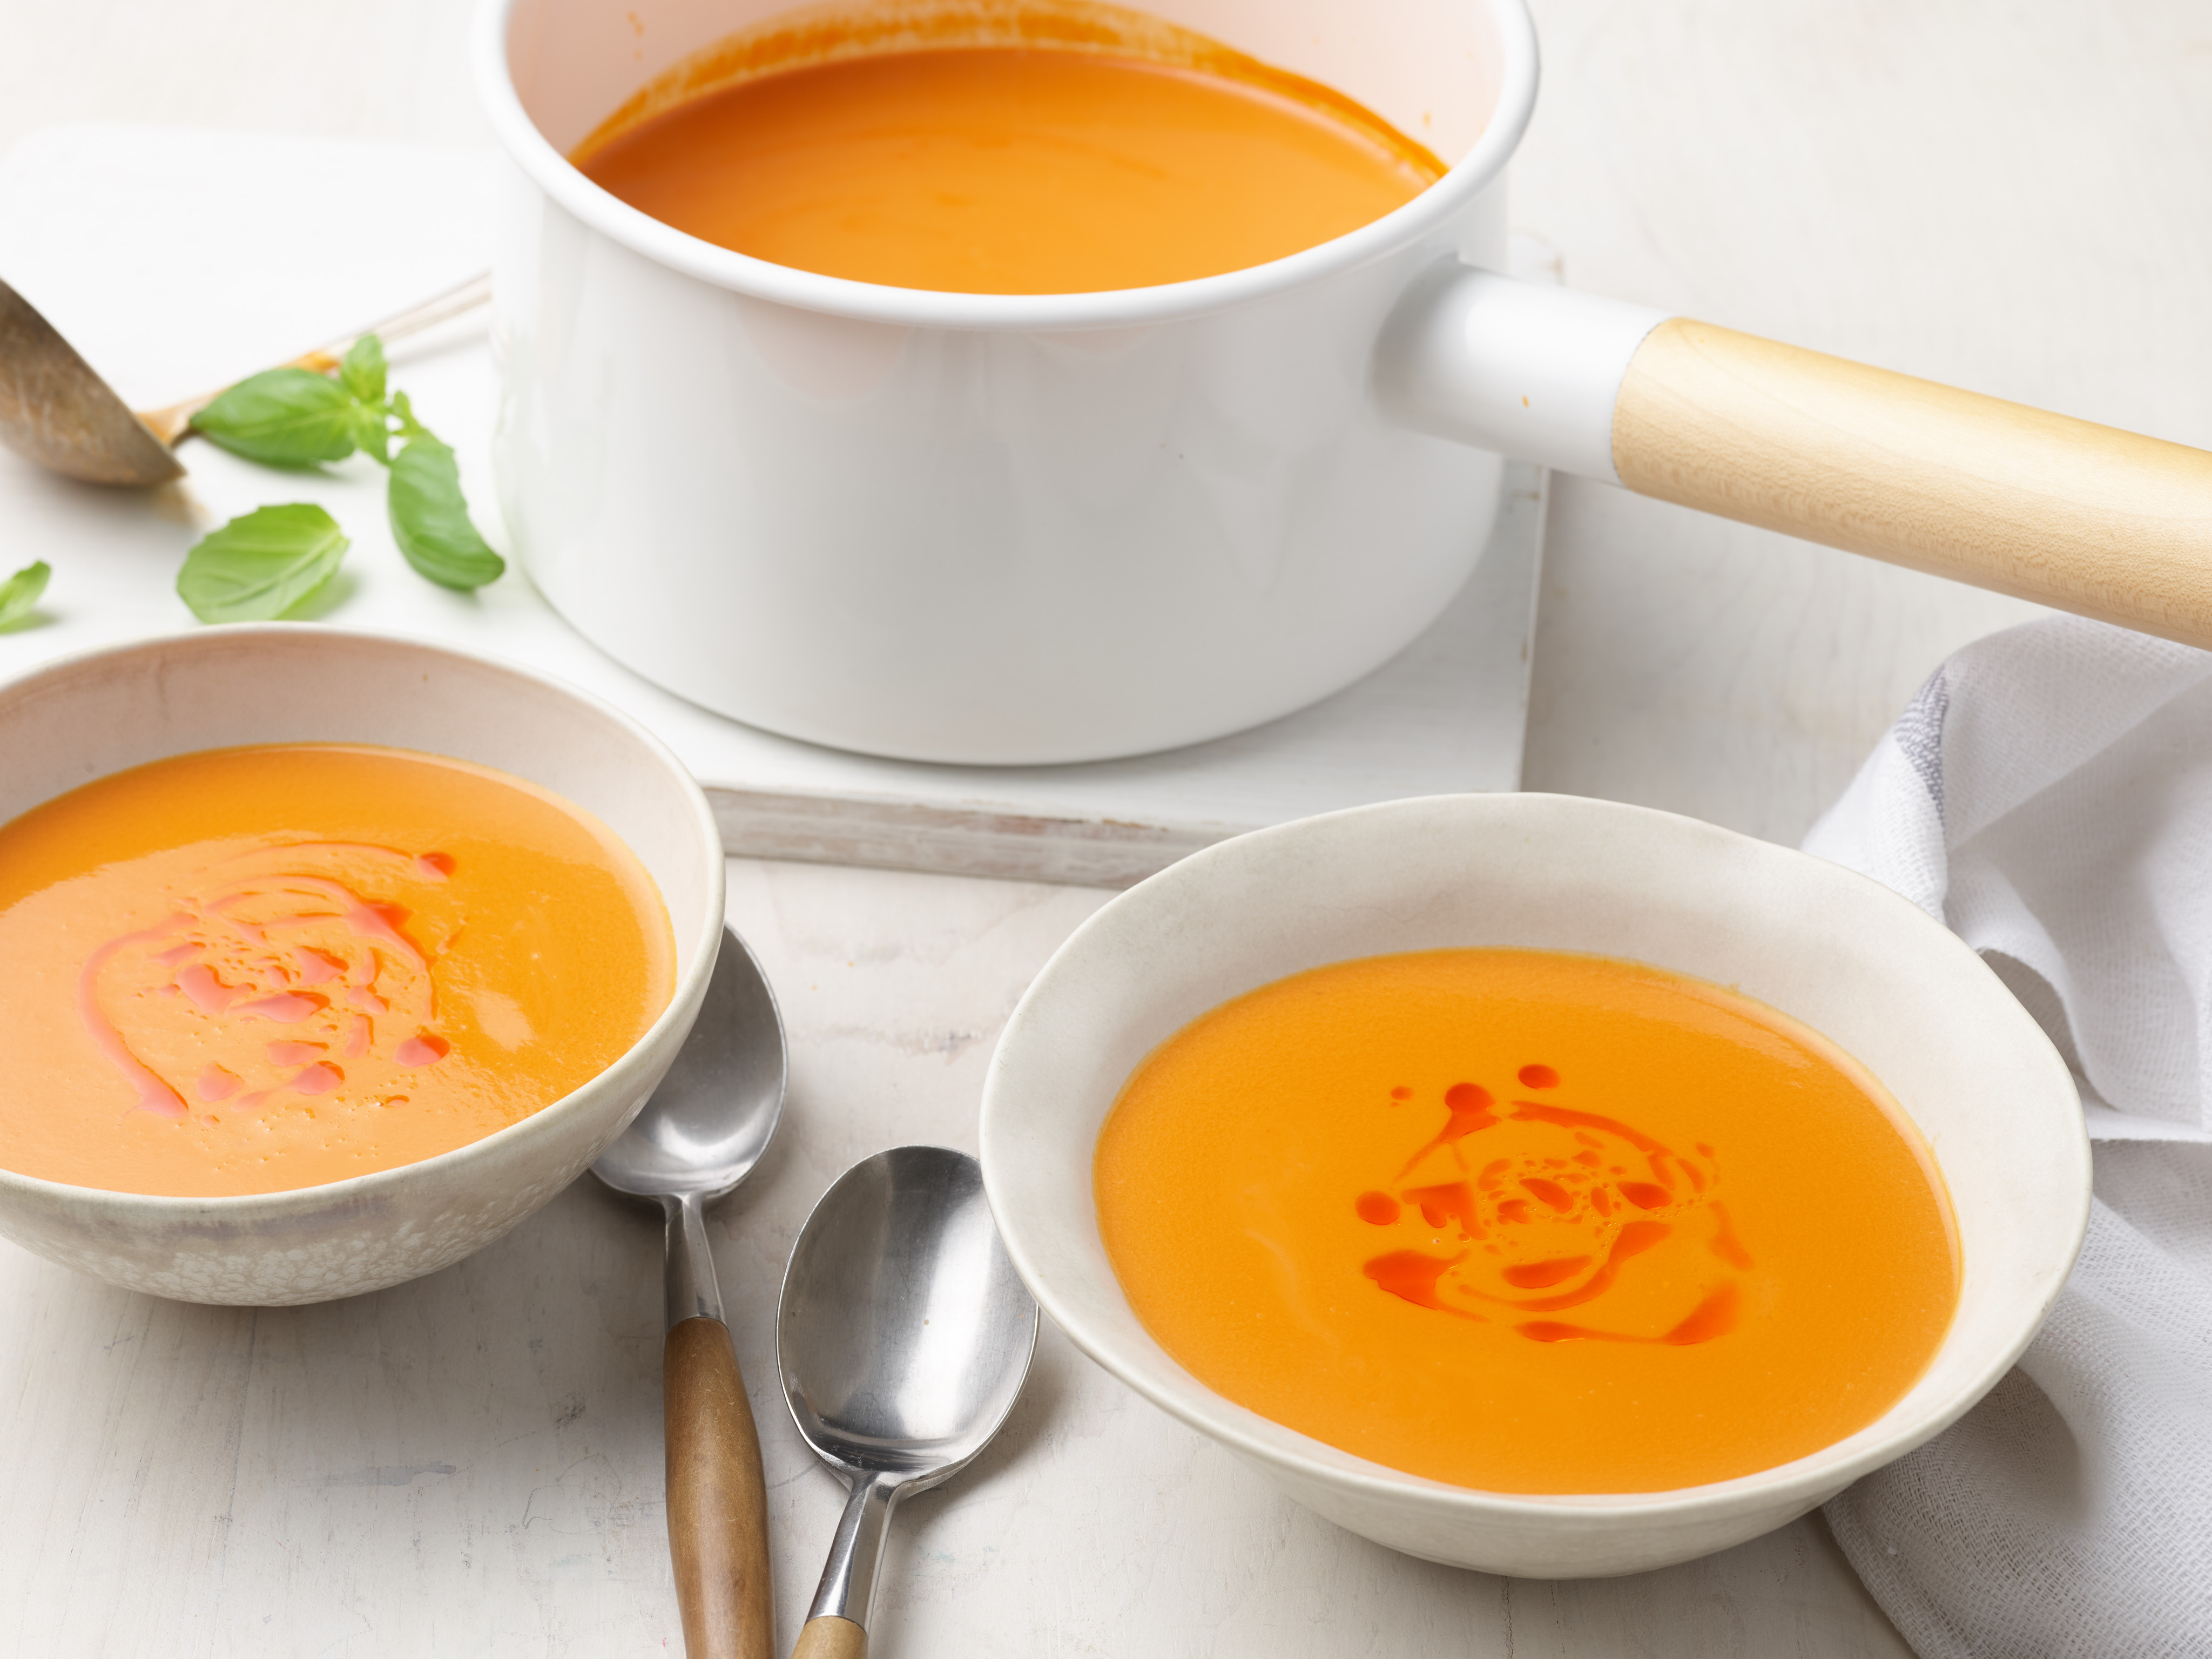 https://www.cookingchanneltv.com/content/dam/images/cook/fullset/2015/3/27/0/CCTIF104_Homeade-Roasted-Tomato-Soup-recipe_s3x4.jpg